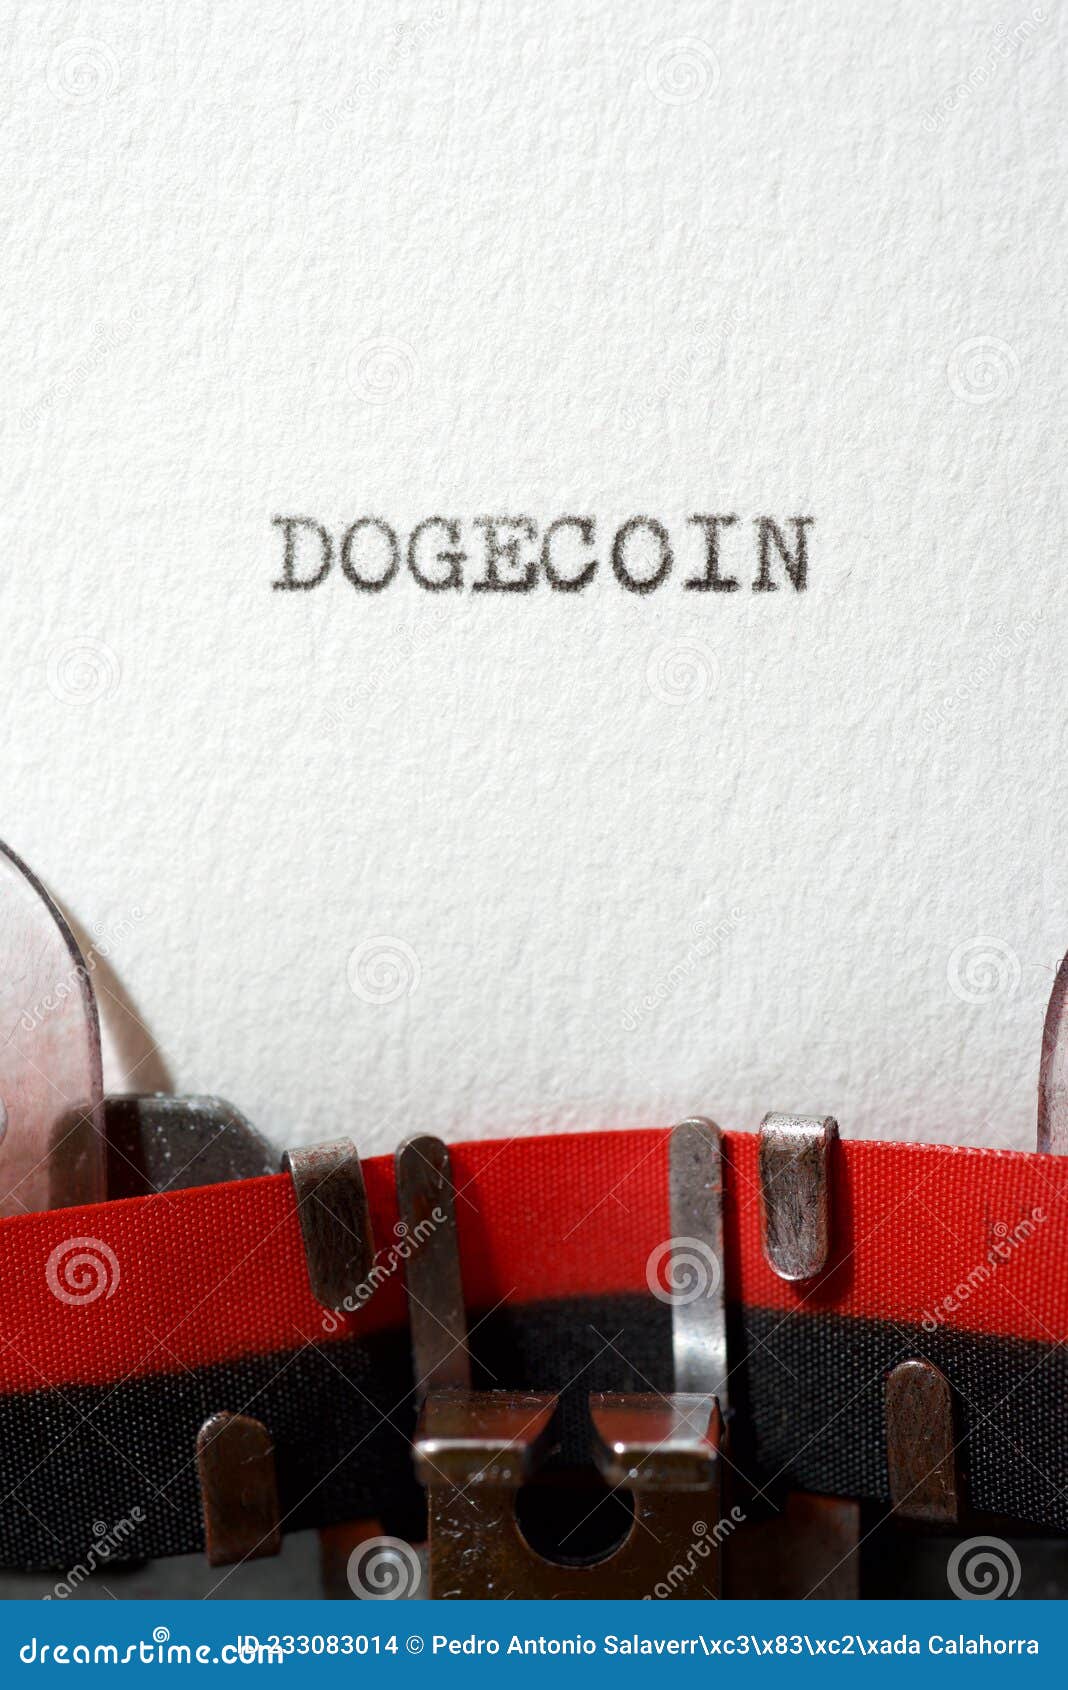 dogecoin concept